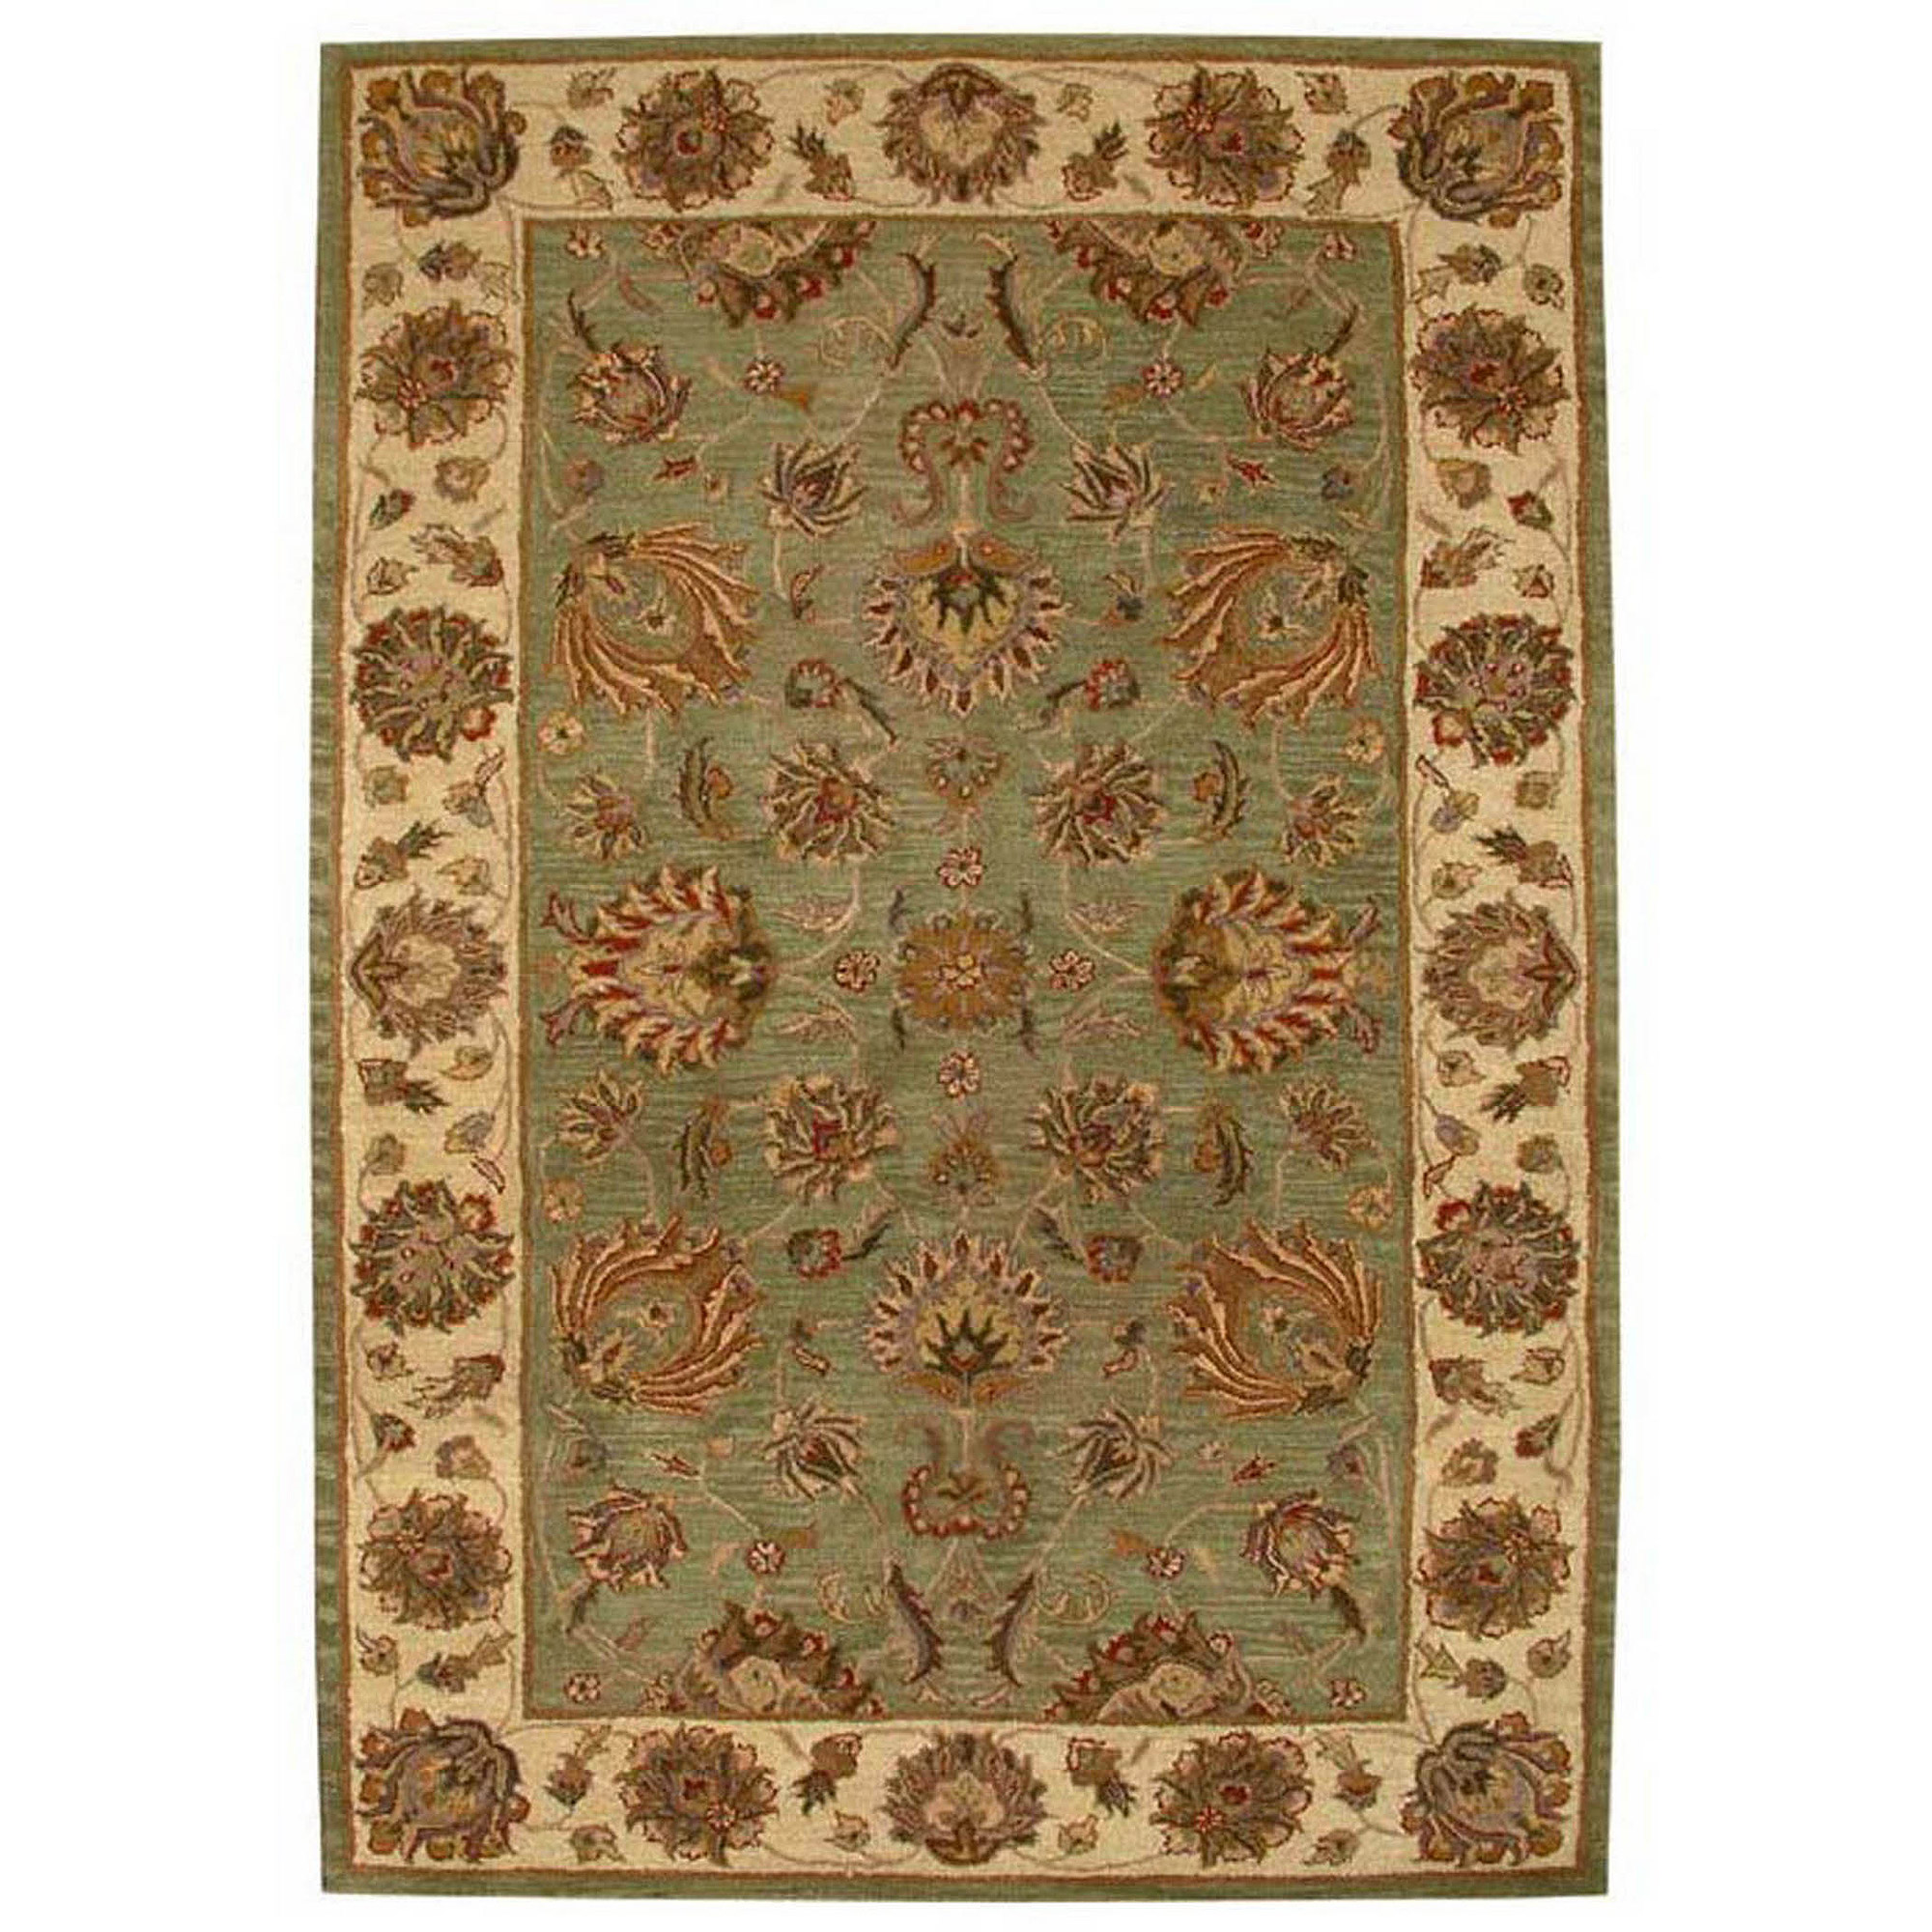 SAFAVIEH Heritage Regis Traditional Wool Area Rug, Green/Gold, 6' x 9' - image 1 of 10